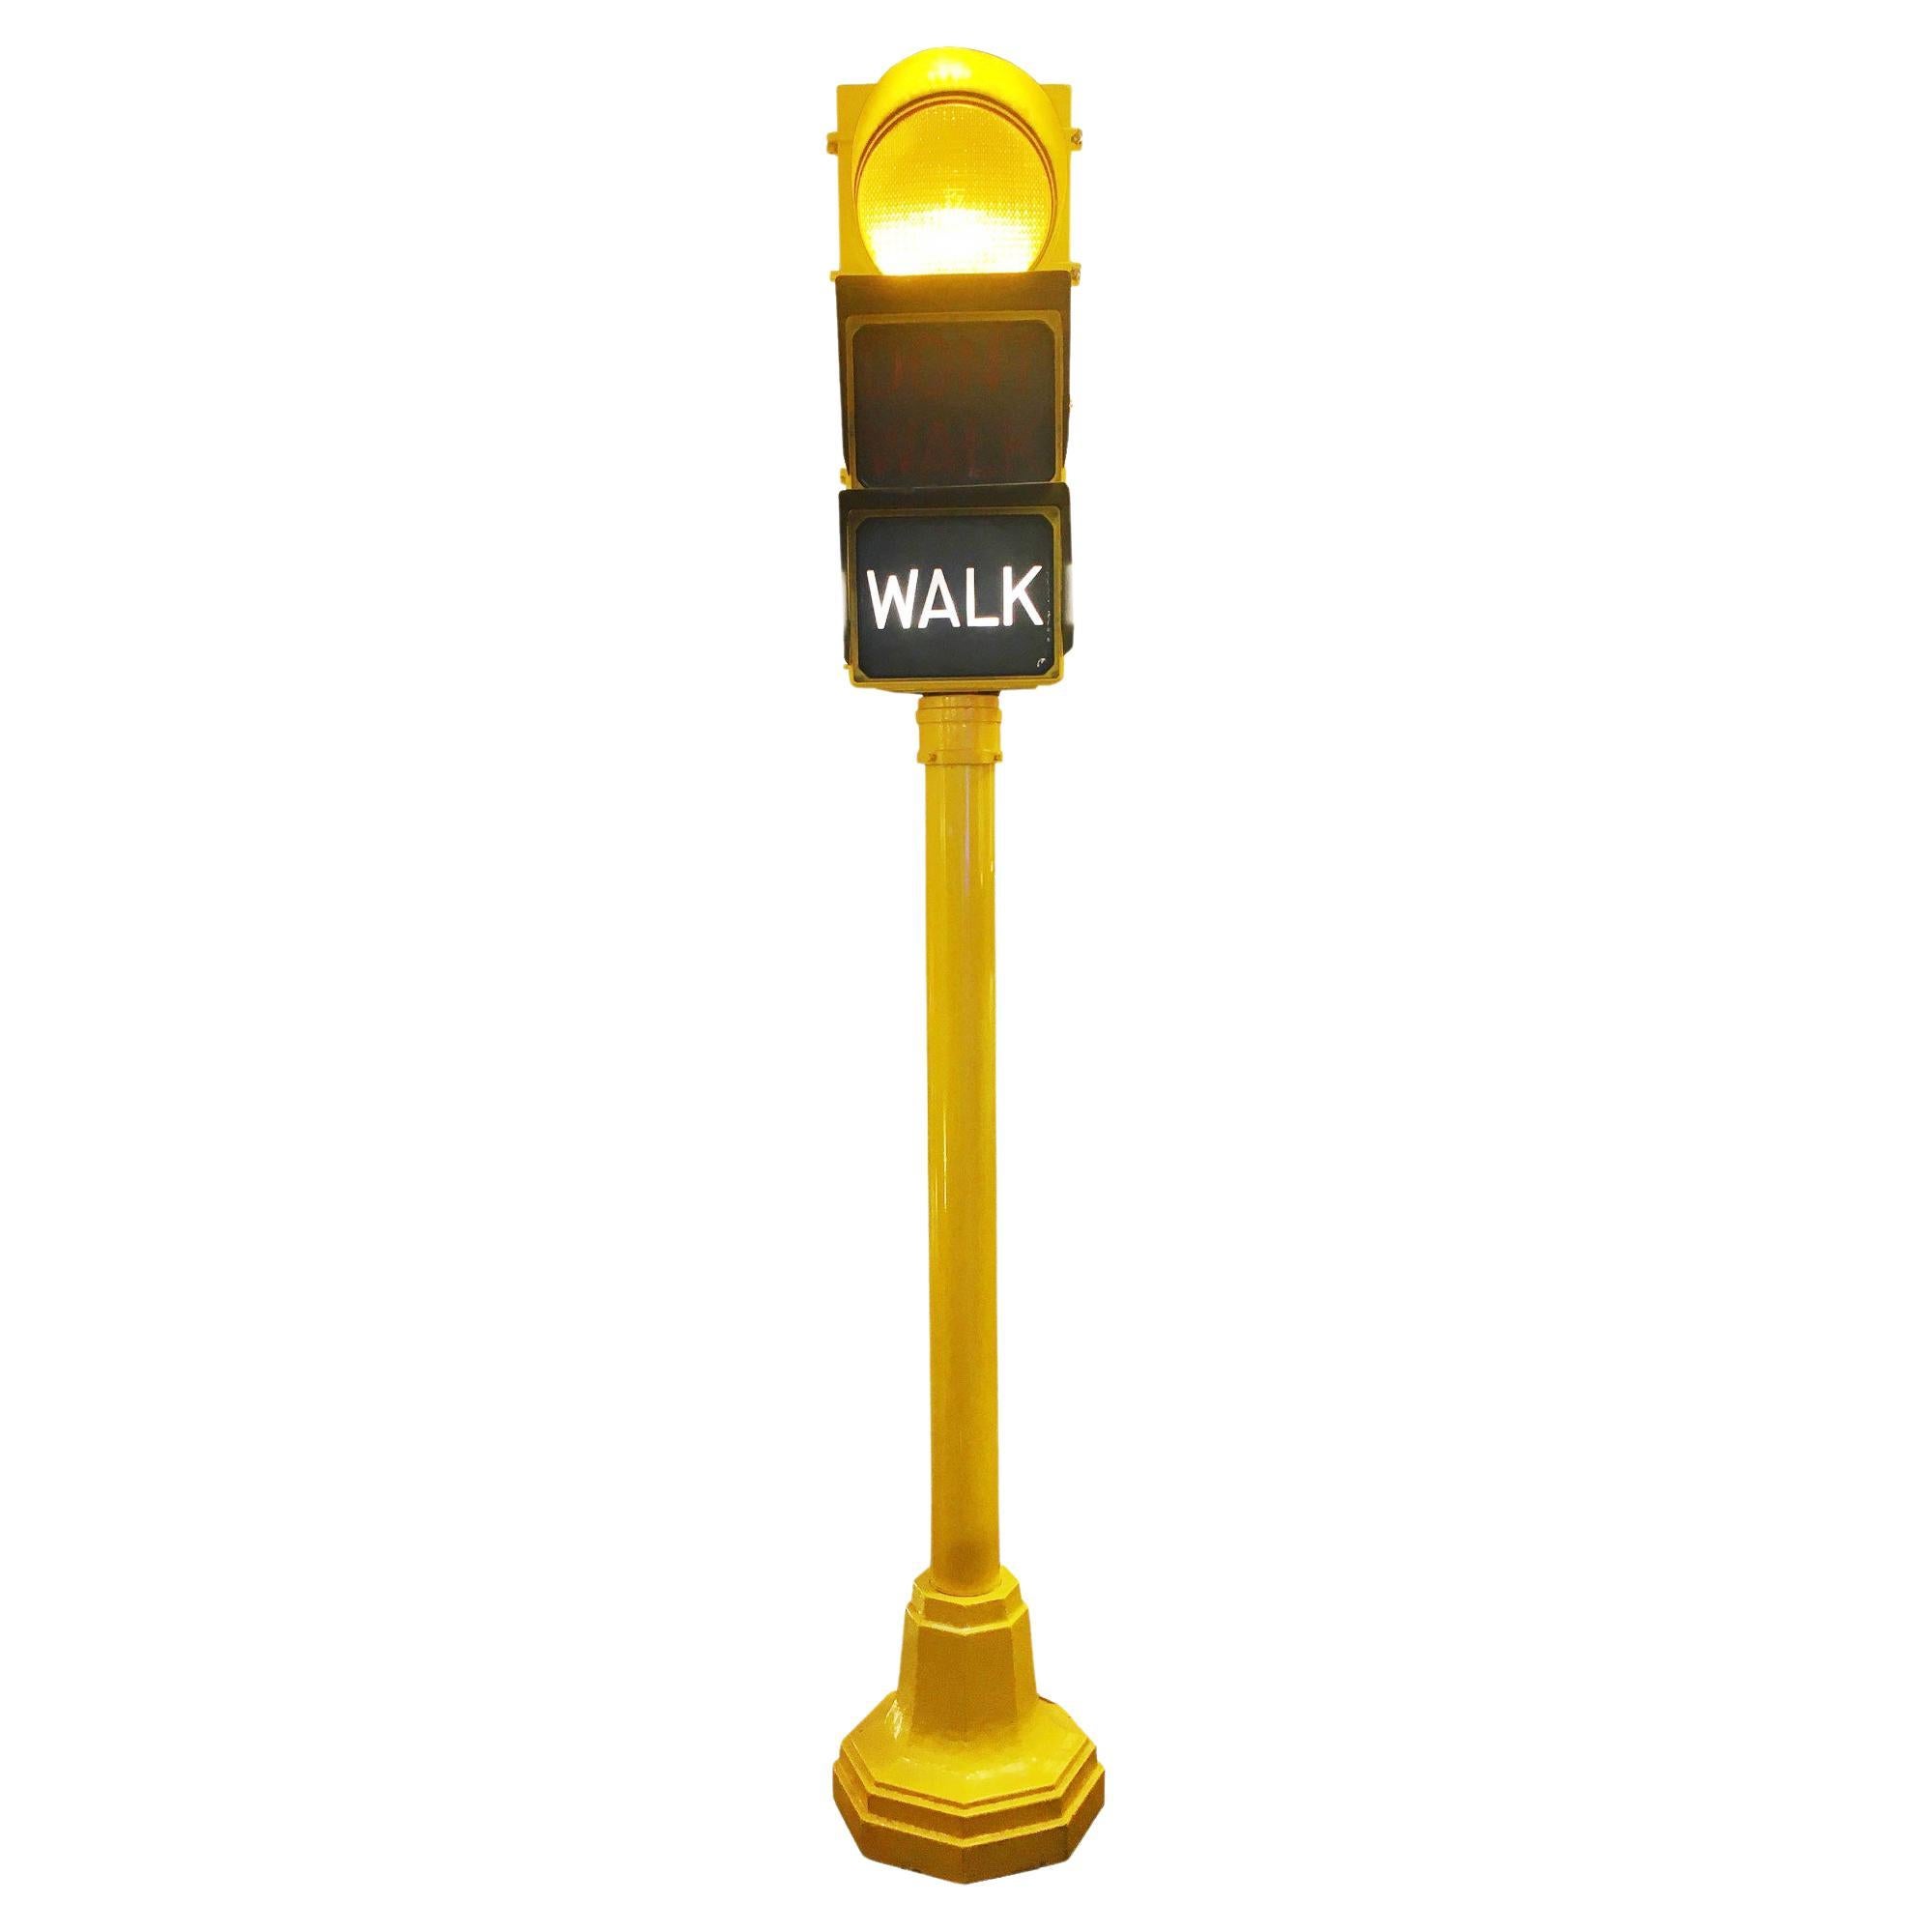 Walk Don't Walk Yellow Traffic Light For Sale